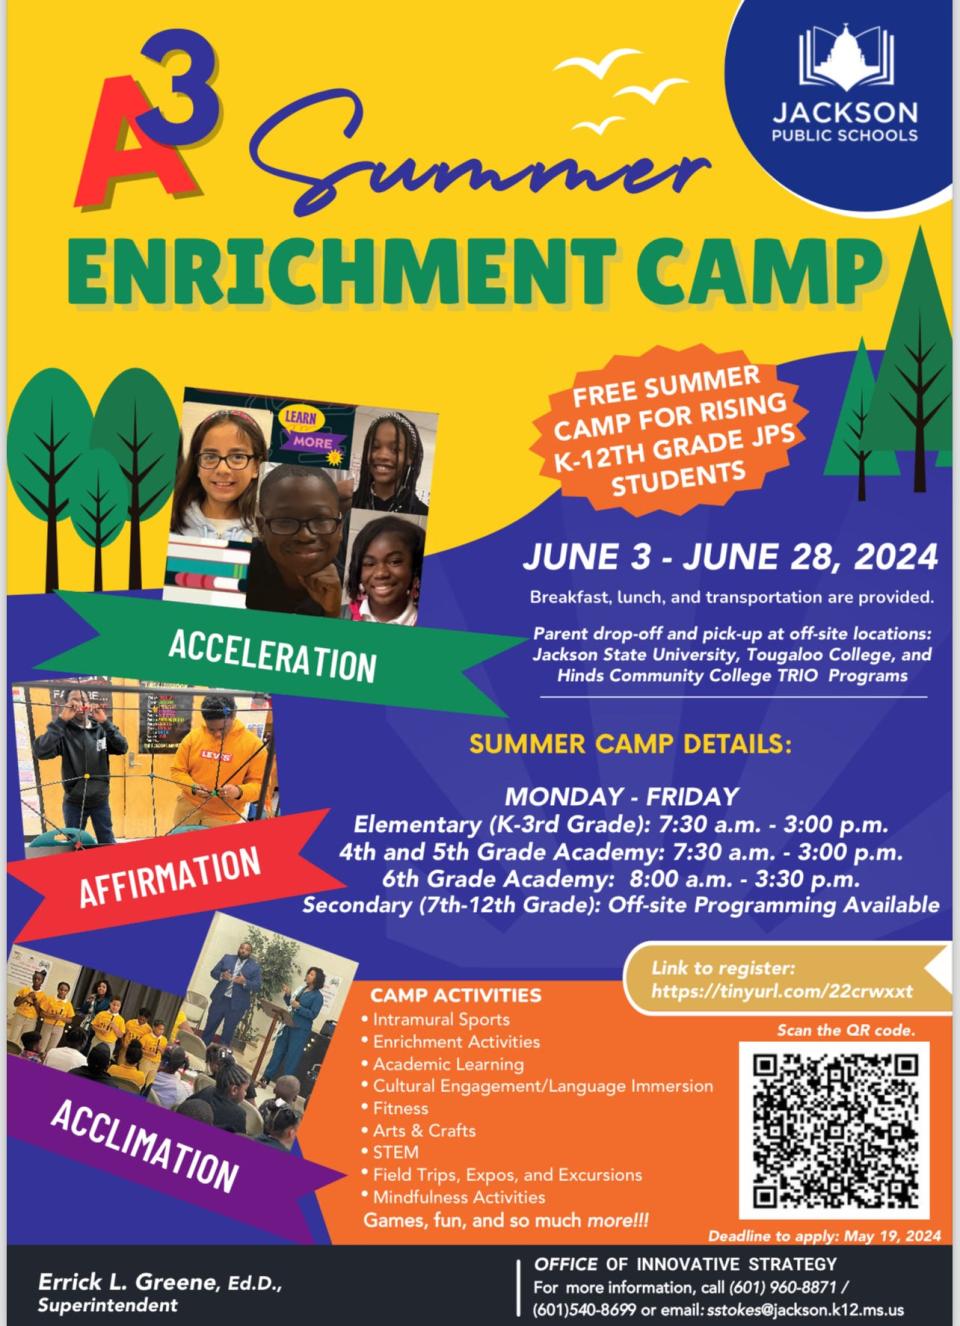 A3 Summer Enrichment Camp flyer.